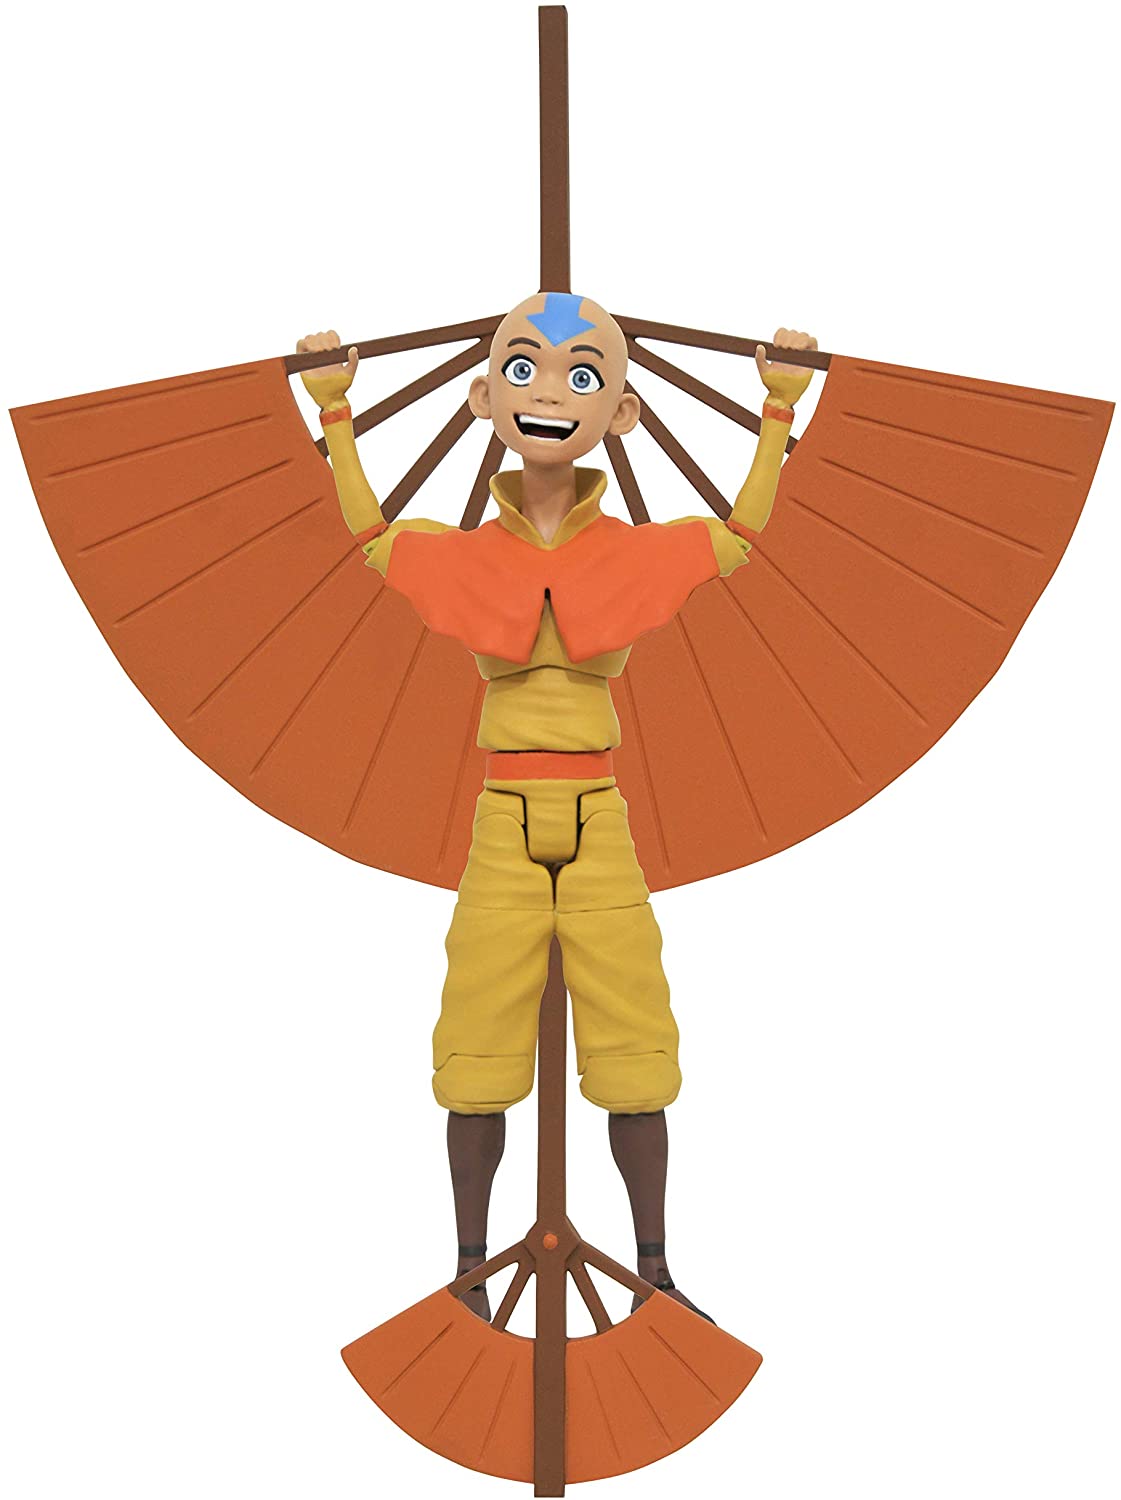 Avatar The Last Airbender Series 2 Aang Action Figure